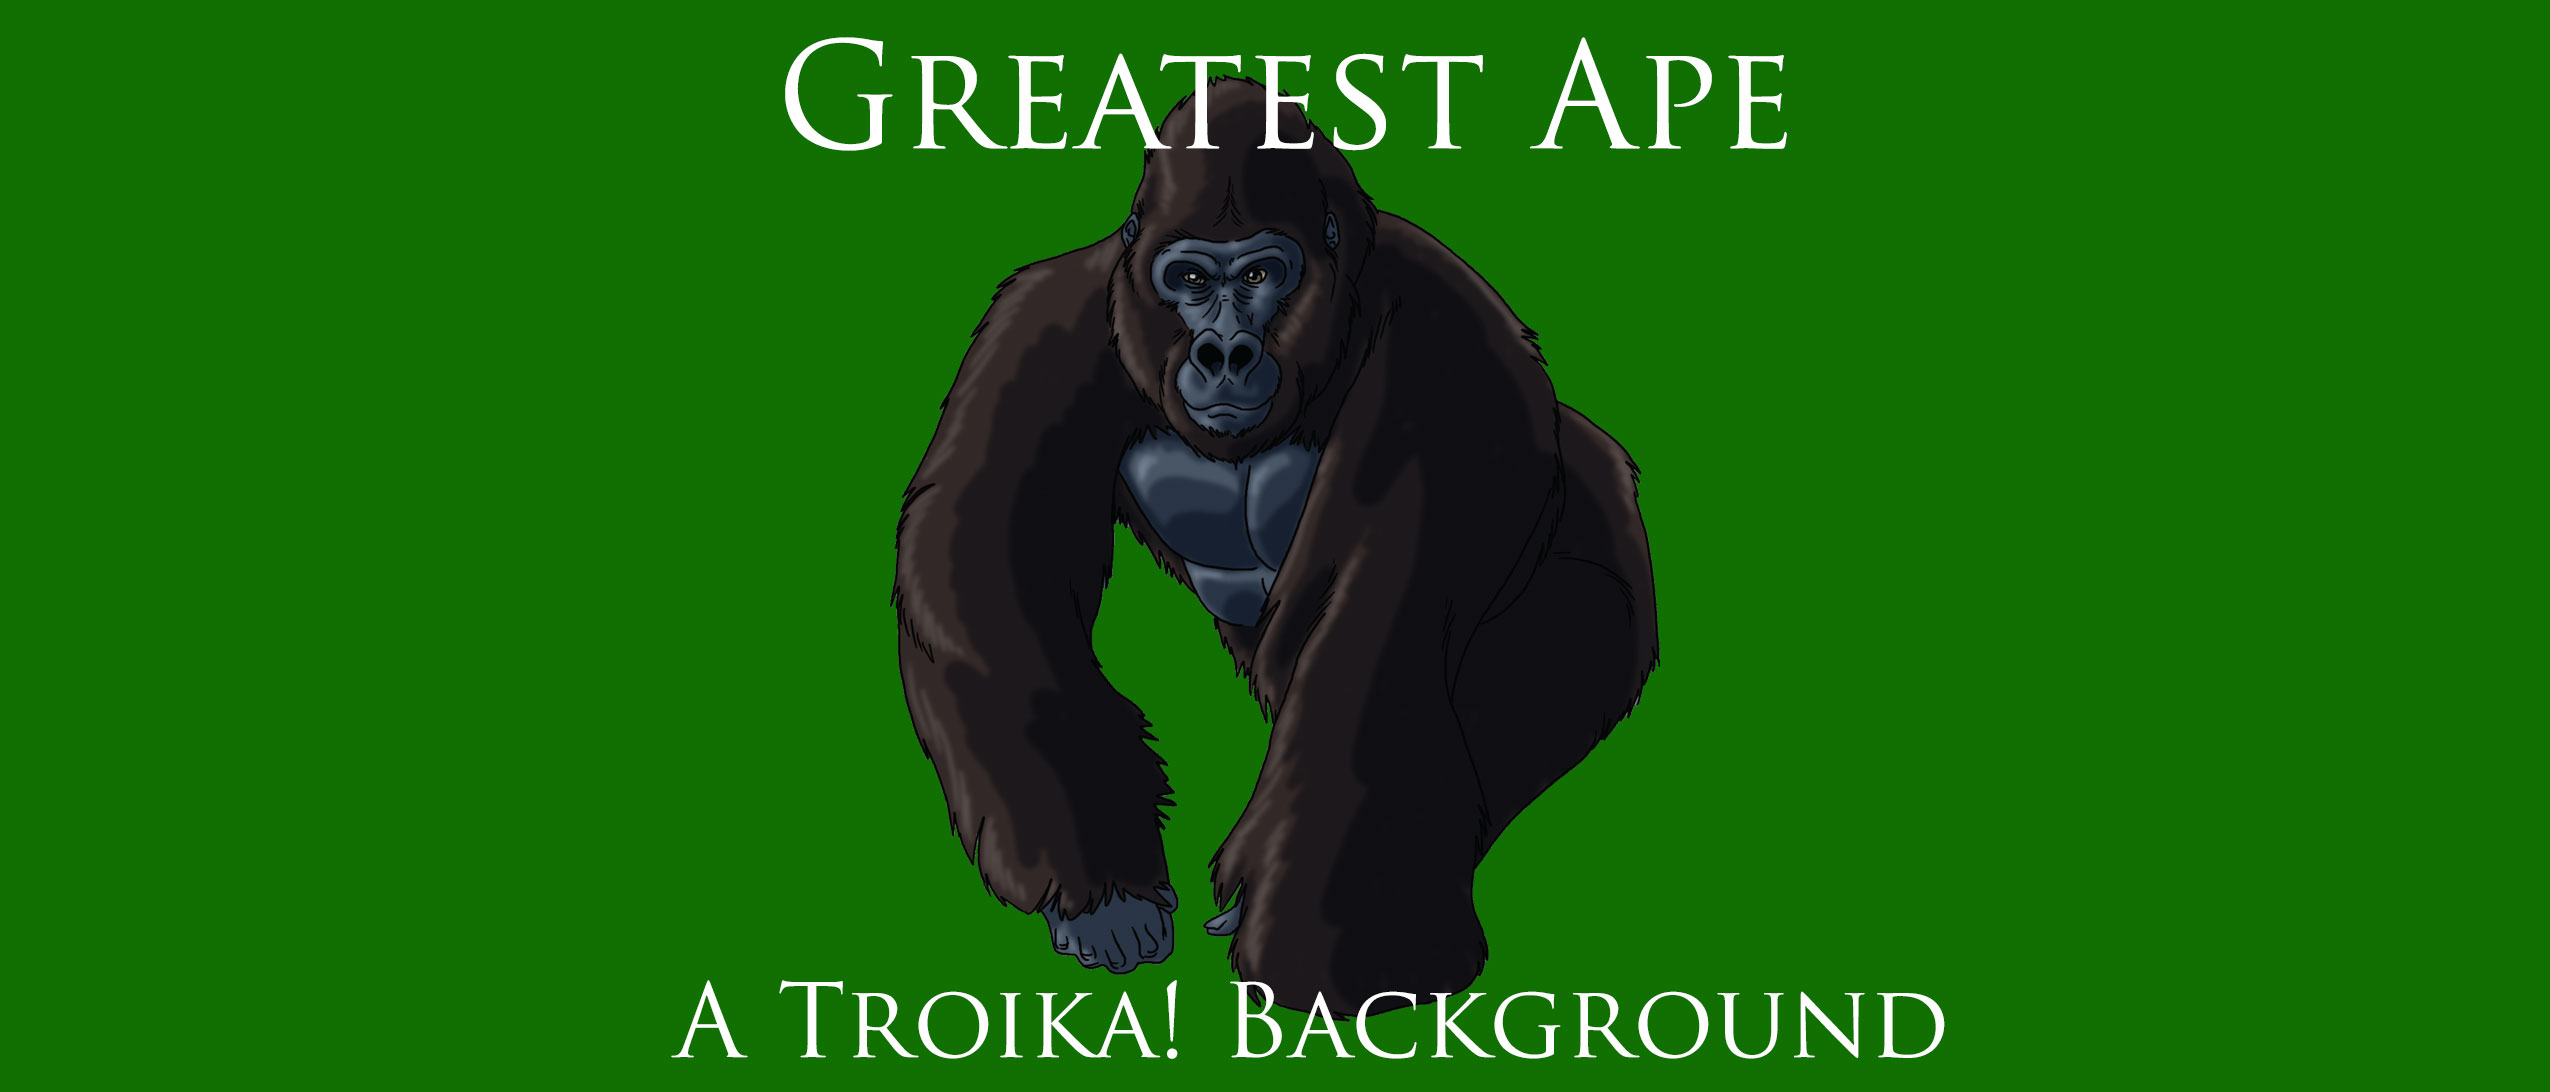 Greatest Ape - A Troika! Background